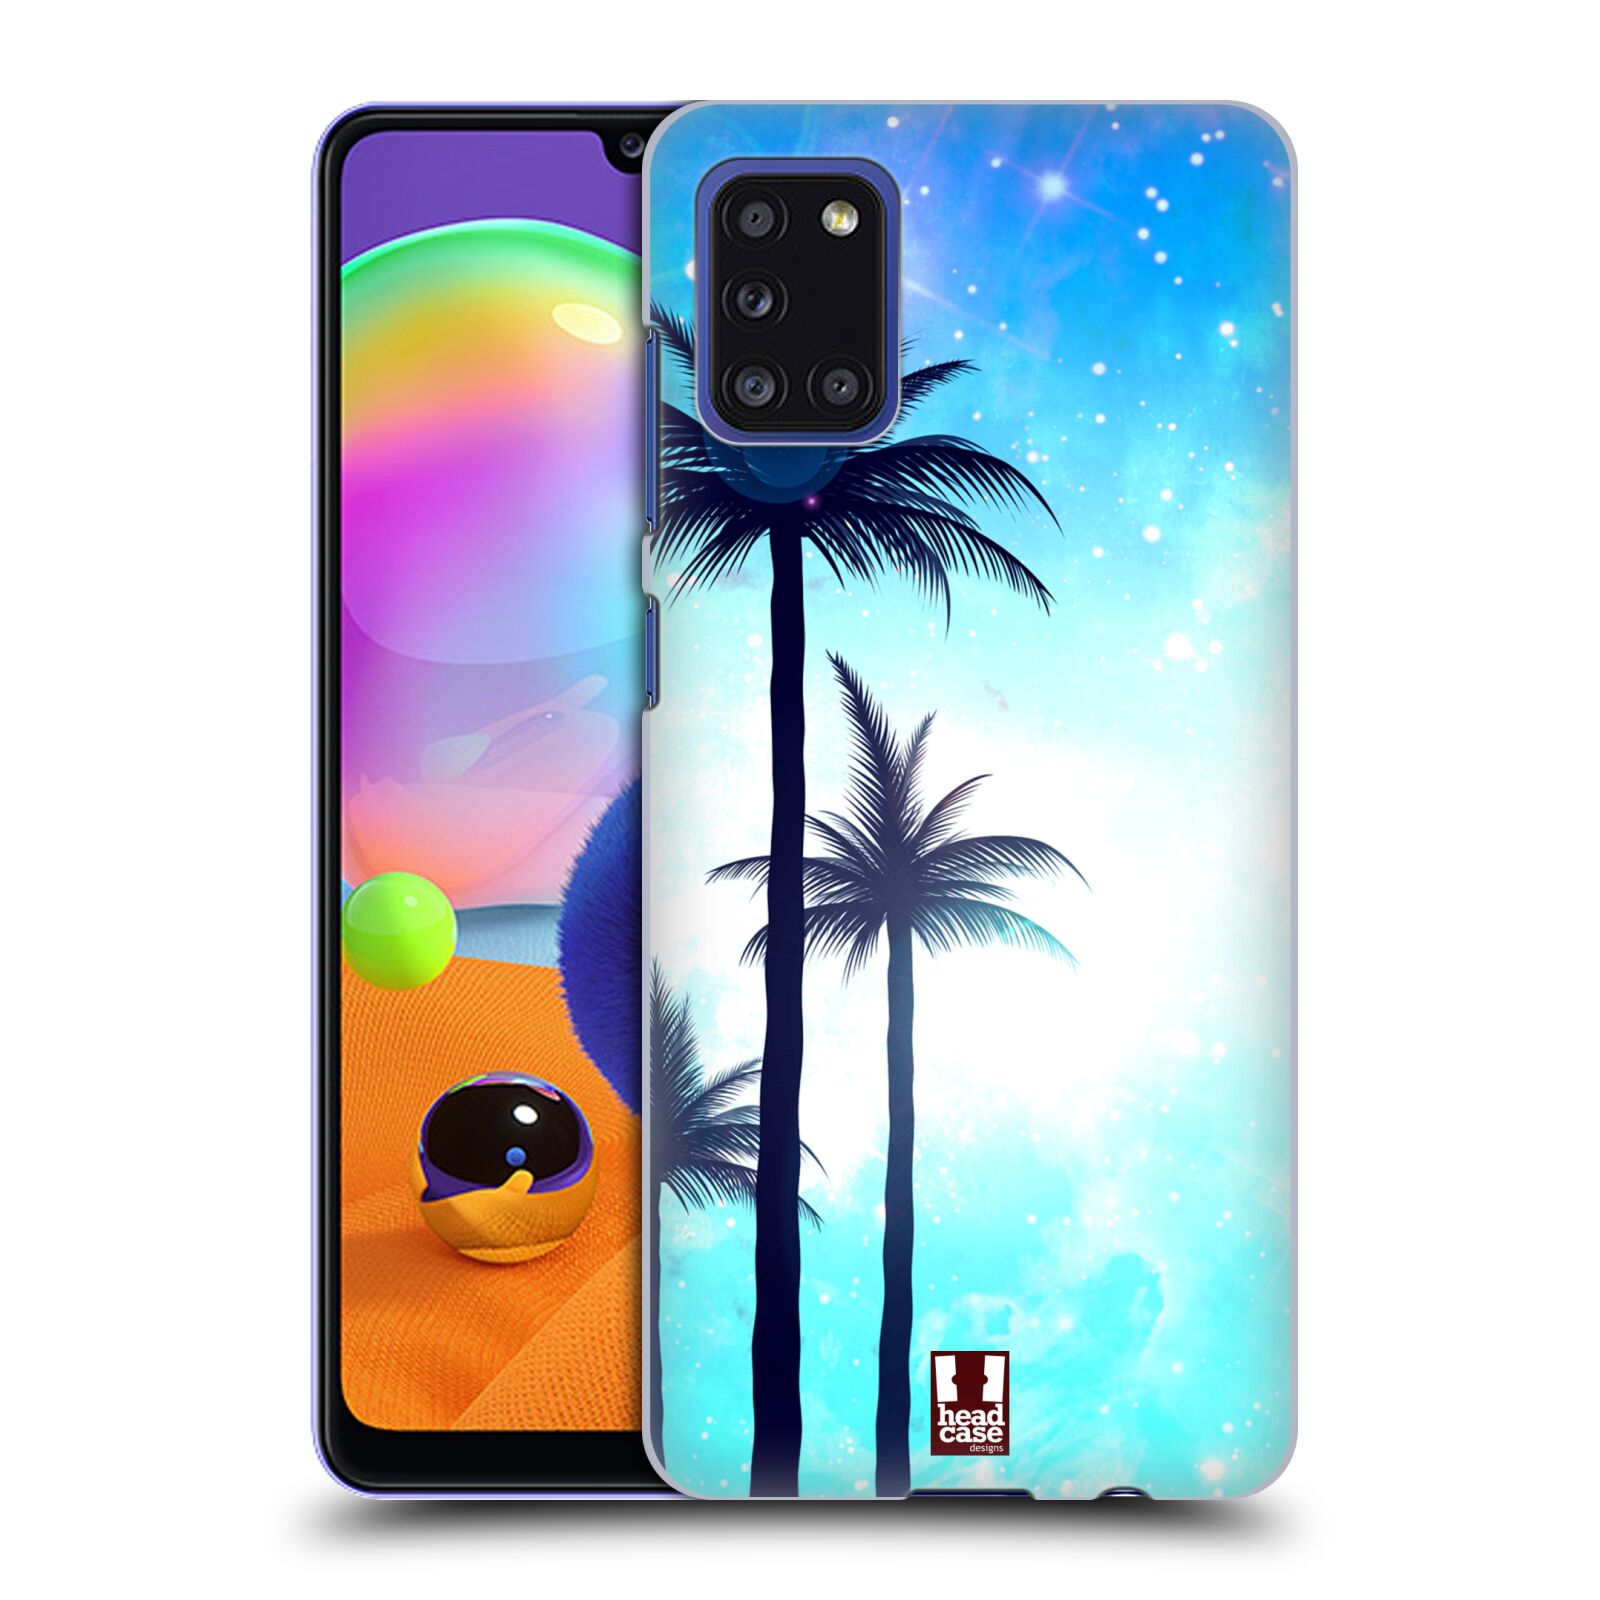 Zadní kryt na mobil Samsung Galaxy A31 vzor Kreslený motiv silueta moře a palmy MODRÁ